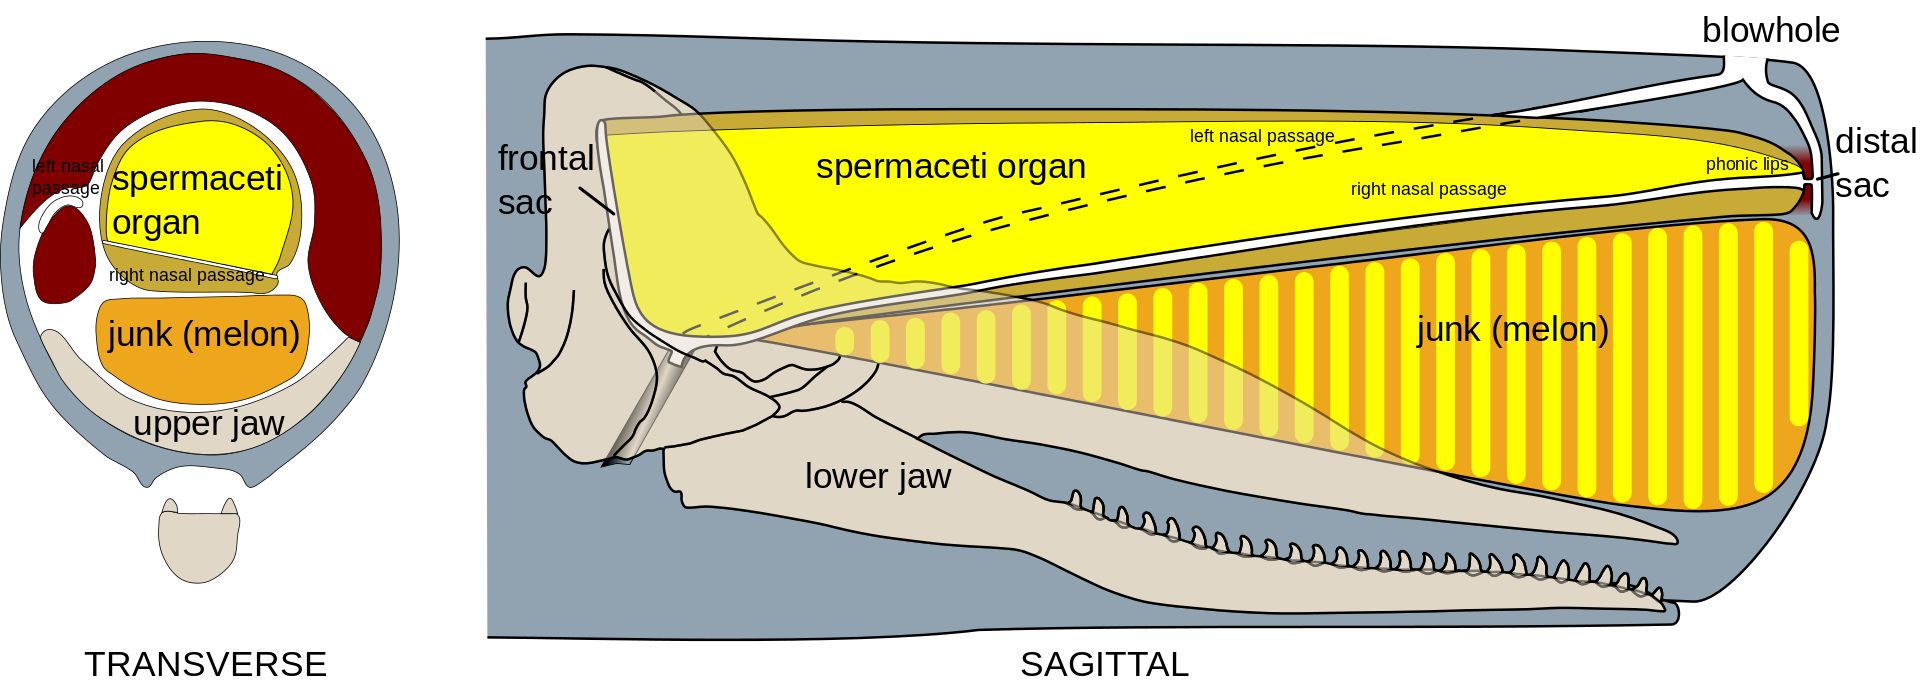 Anatomi kepala paus sperma. Sumber: Wikipedia